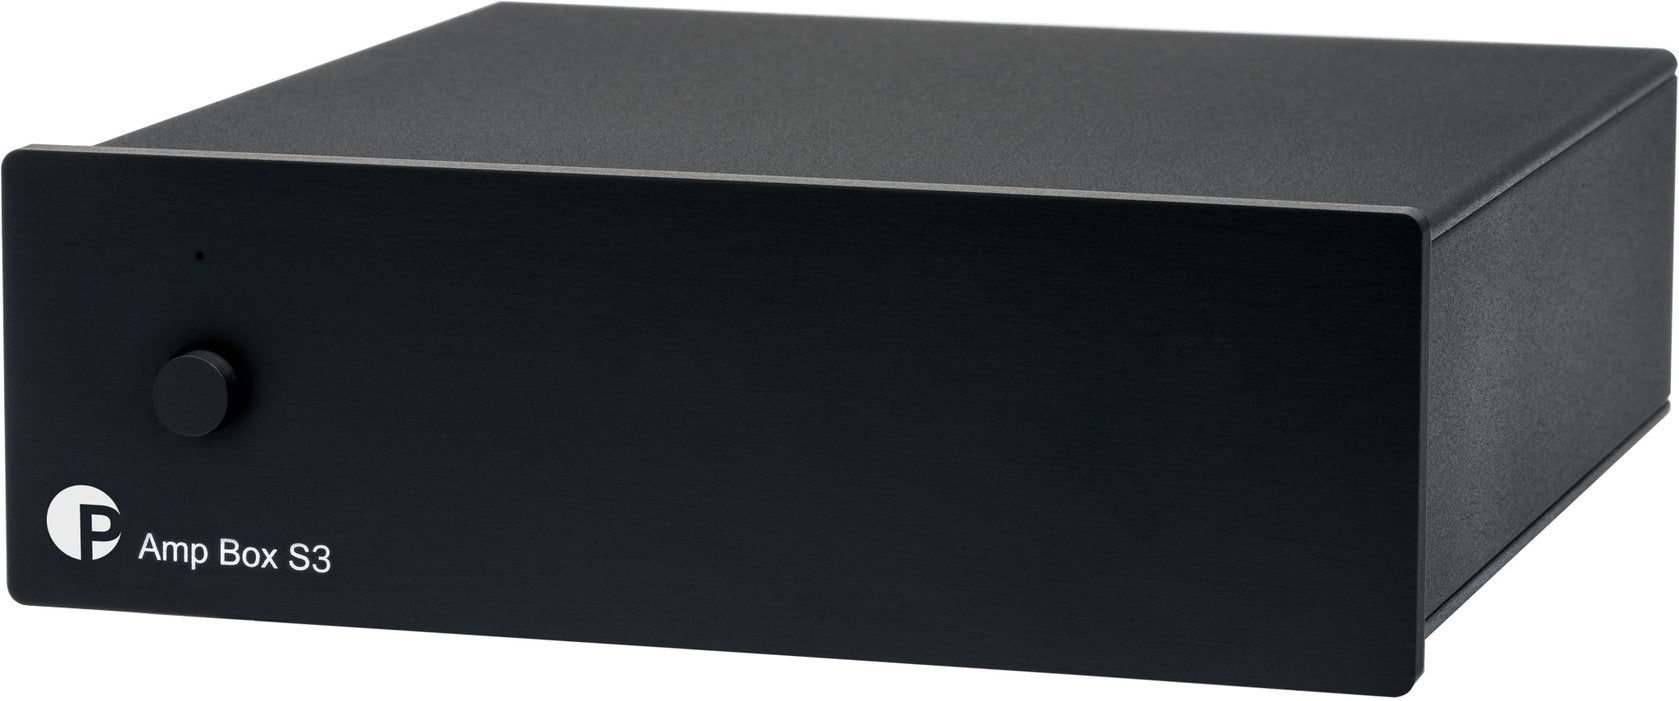 Pro-Ject Amp Box S3 power amplifier